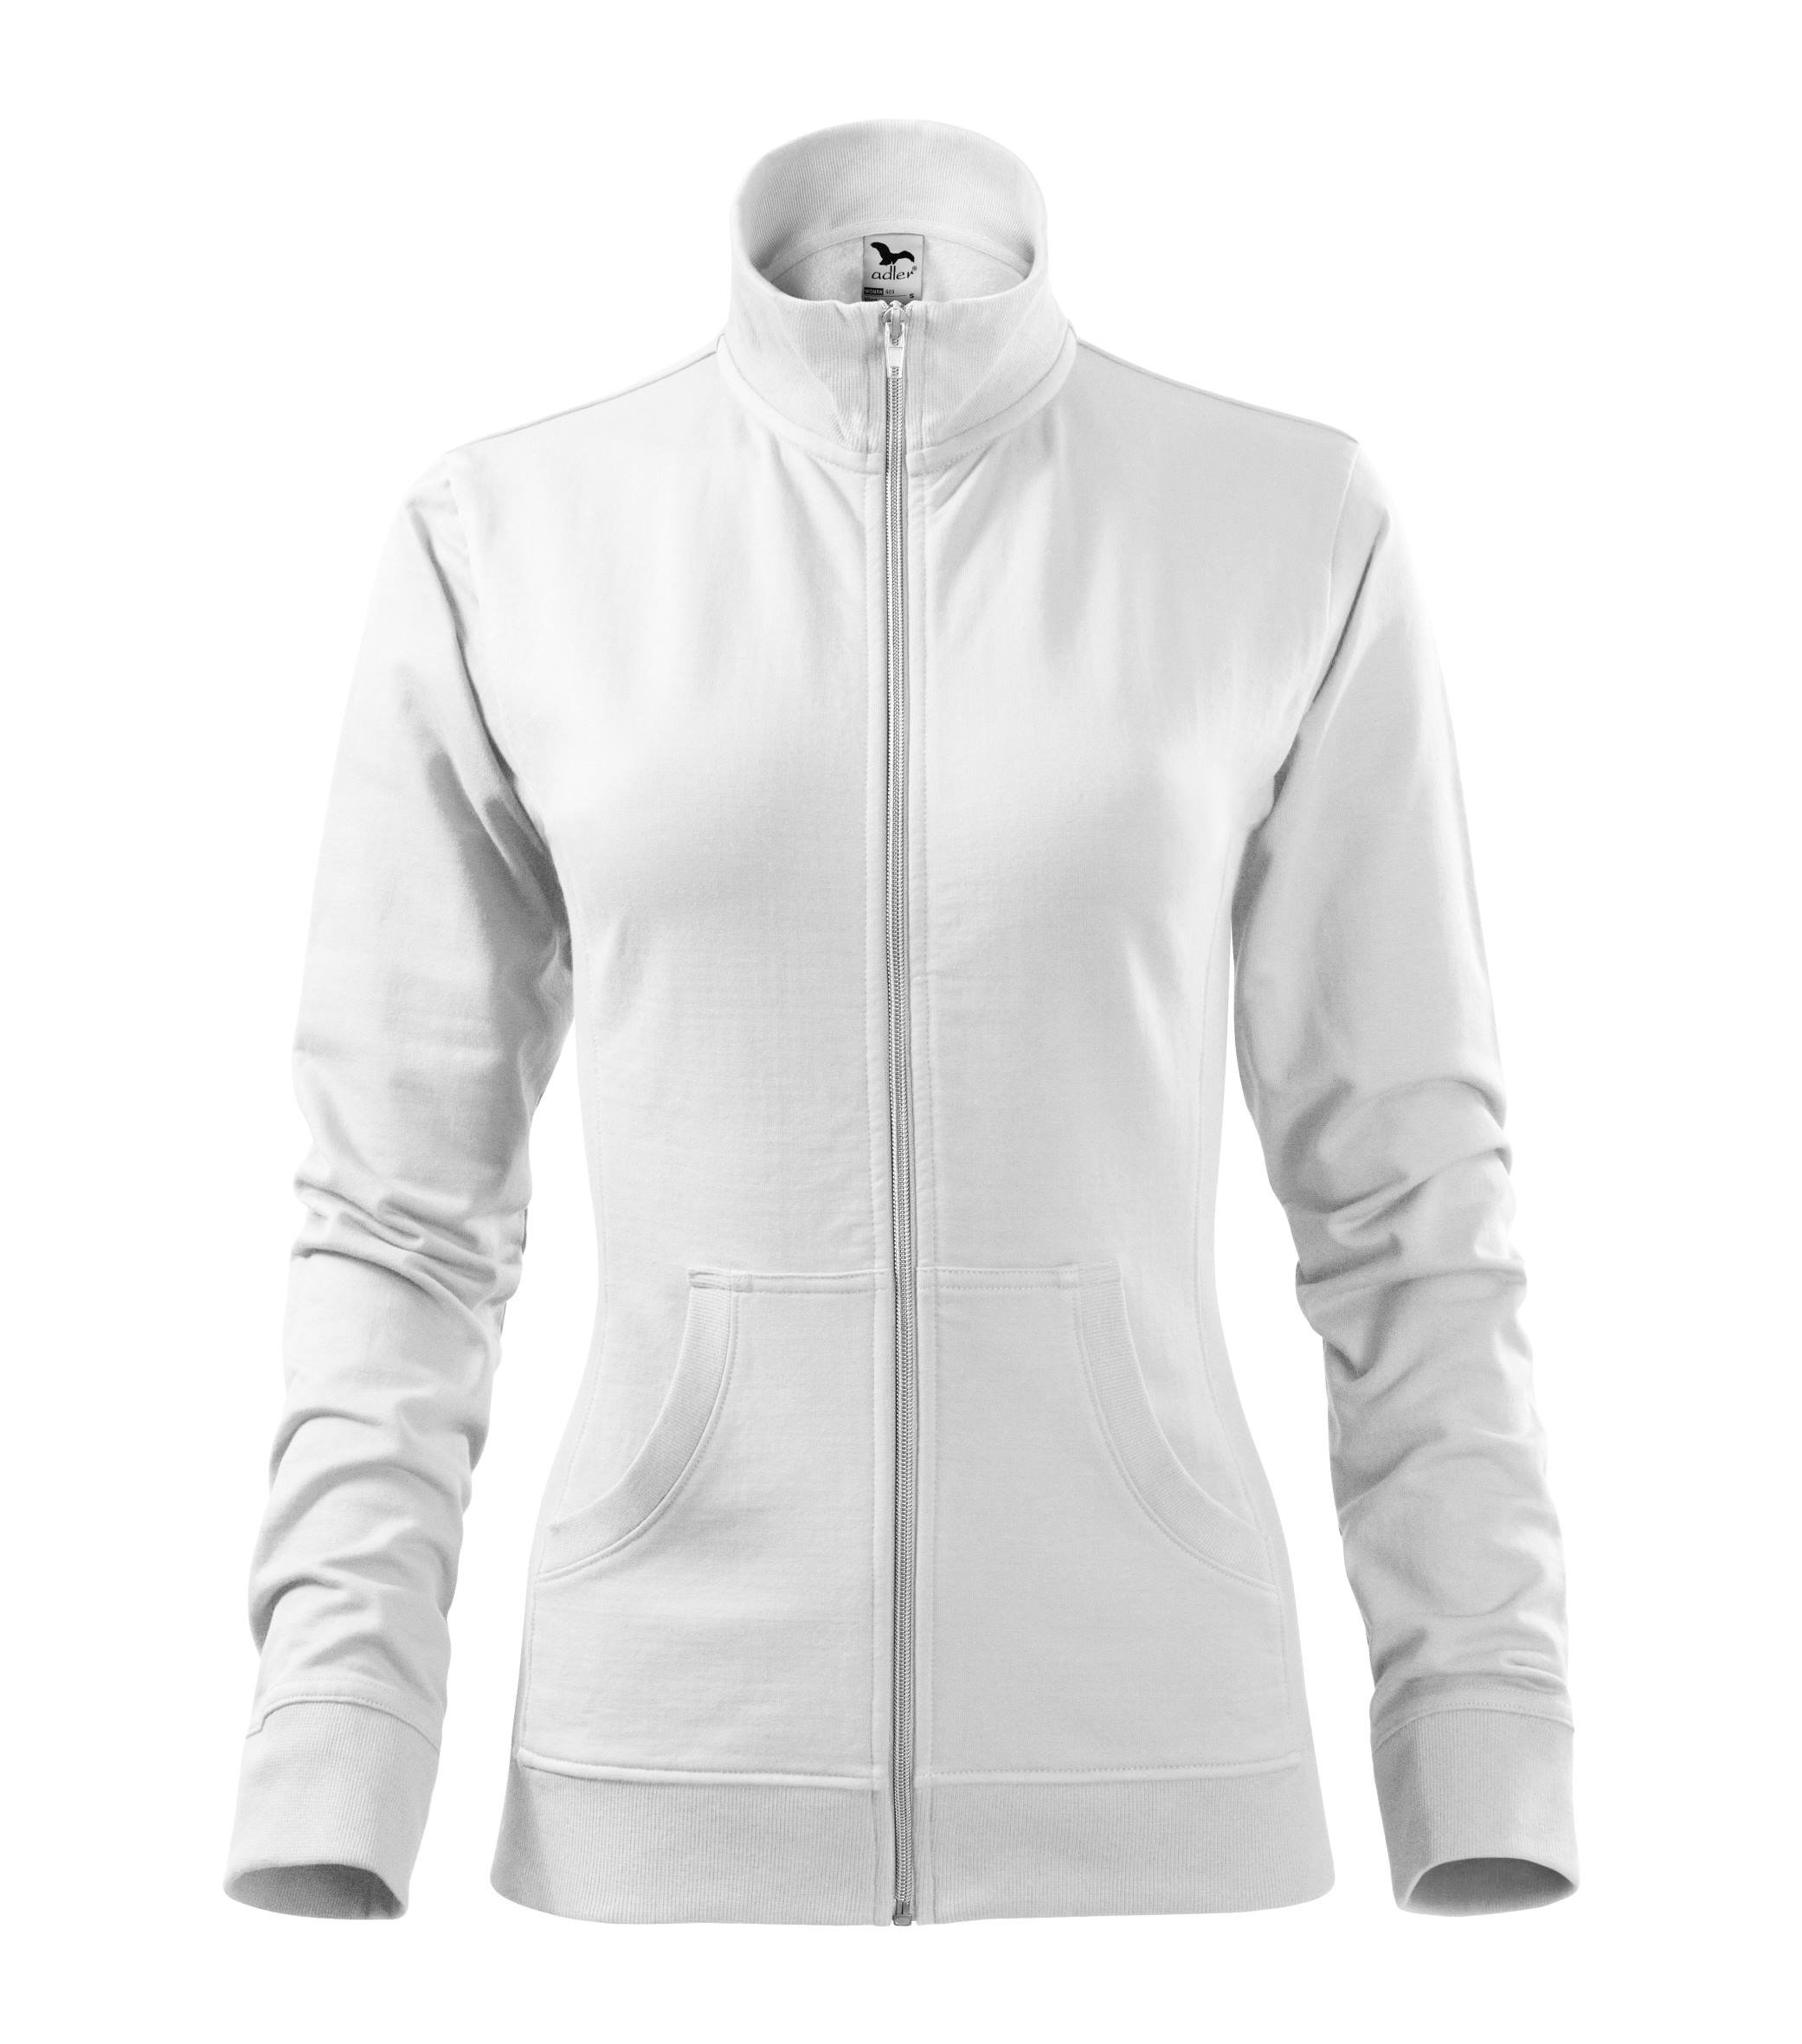 Custom Printed/ Embroidered Ladies Zipped Sweatshirt, white, www.ontimeprint.co.uk